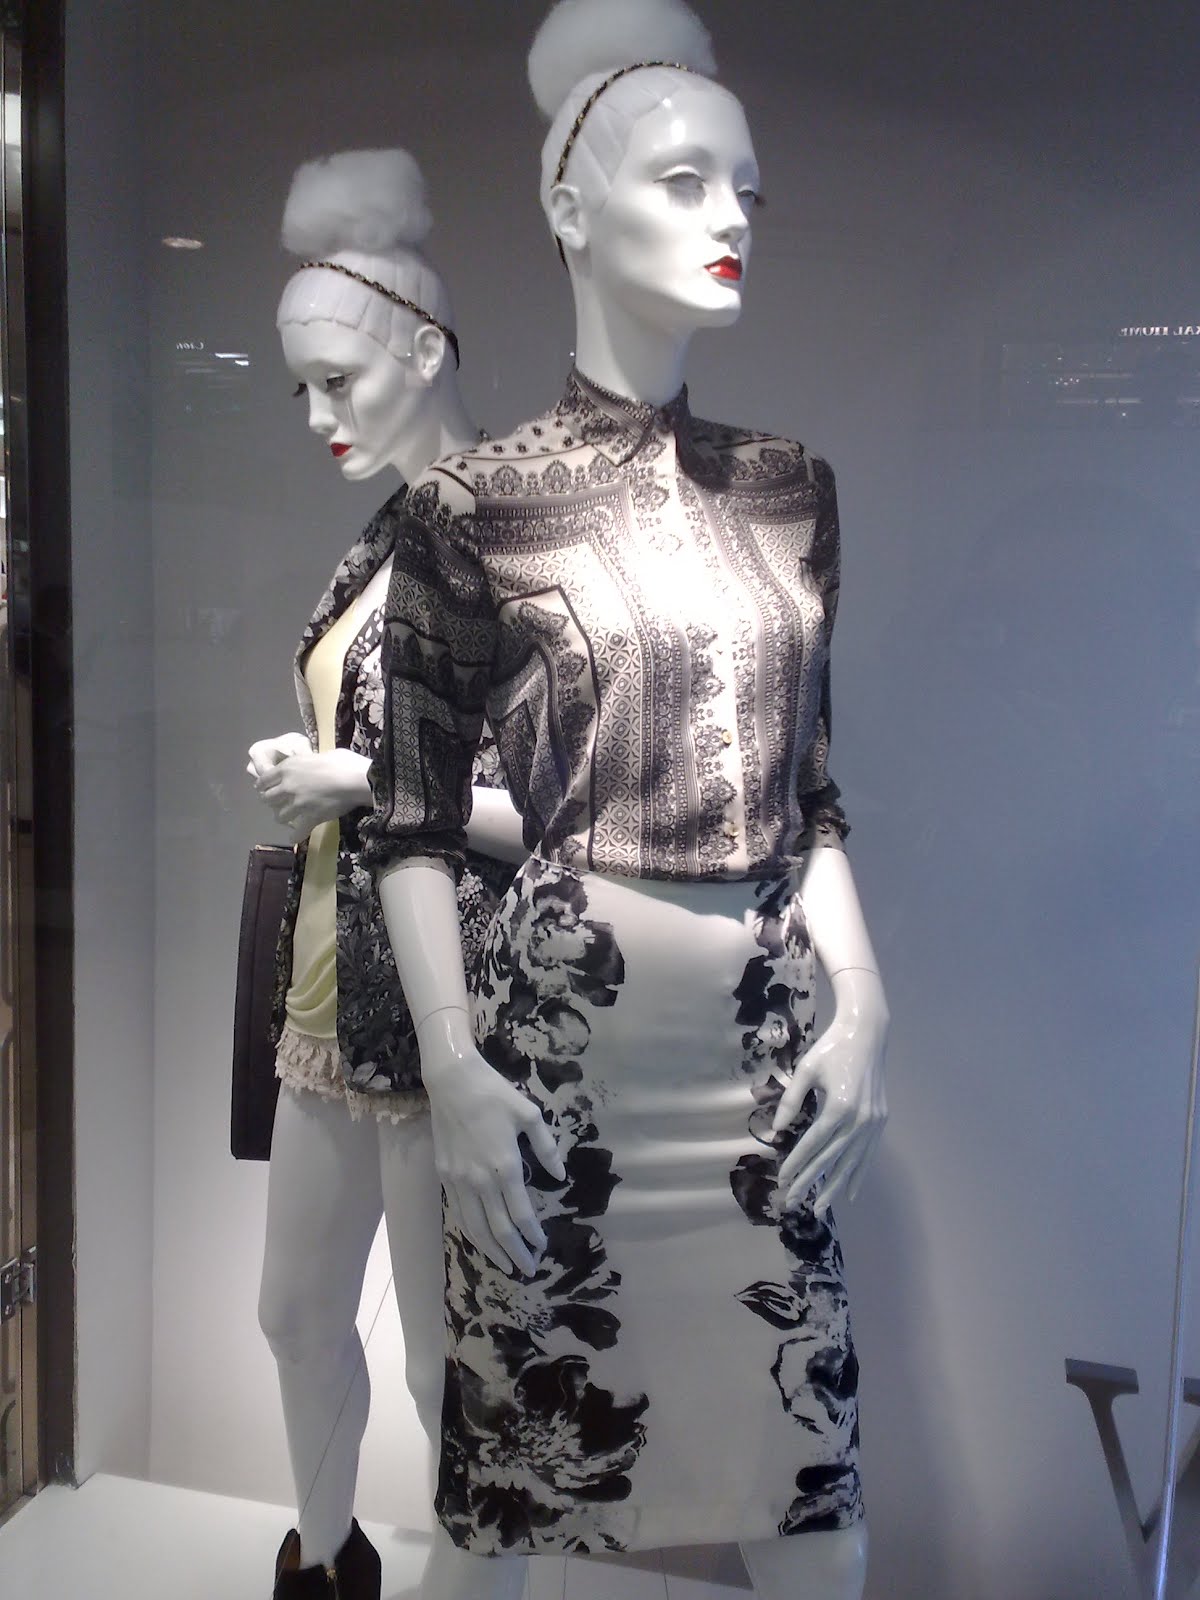 displayhunter: Zara: New women collection window display, part 2